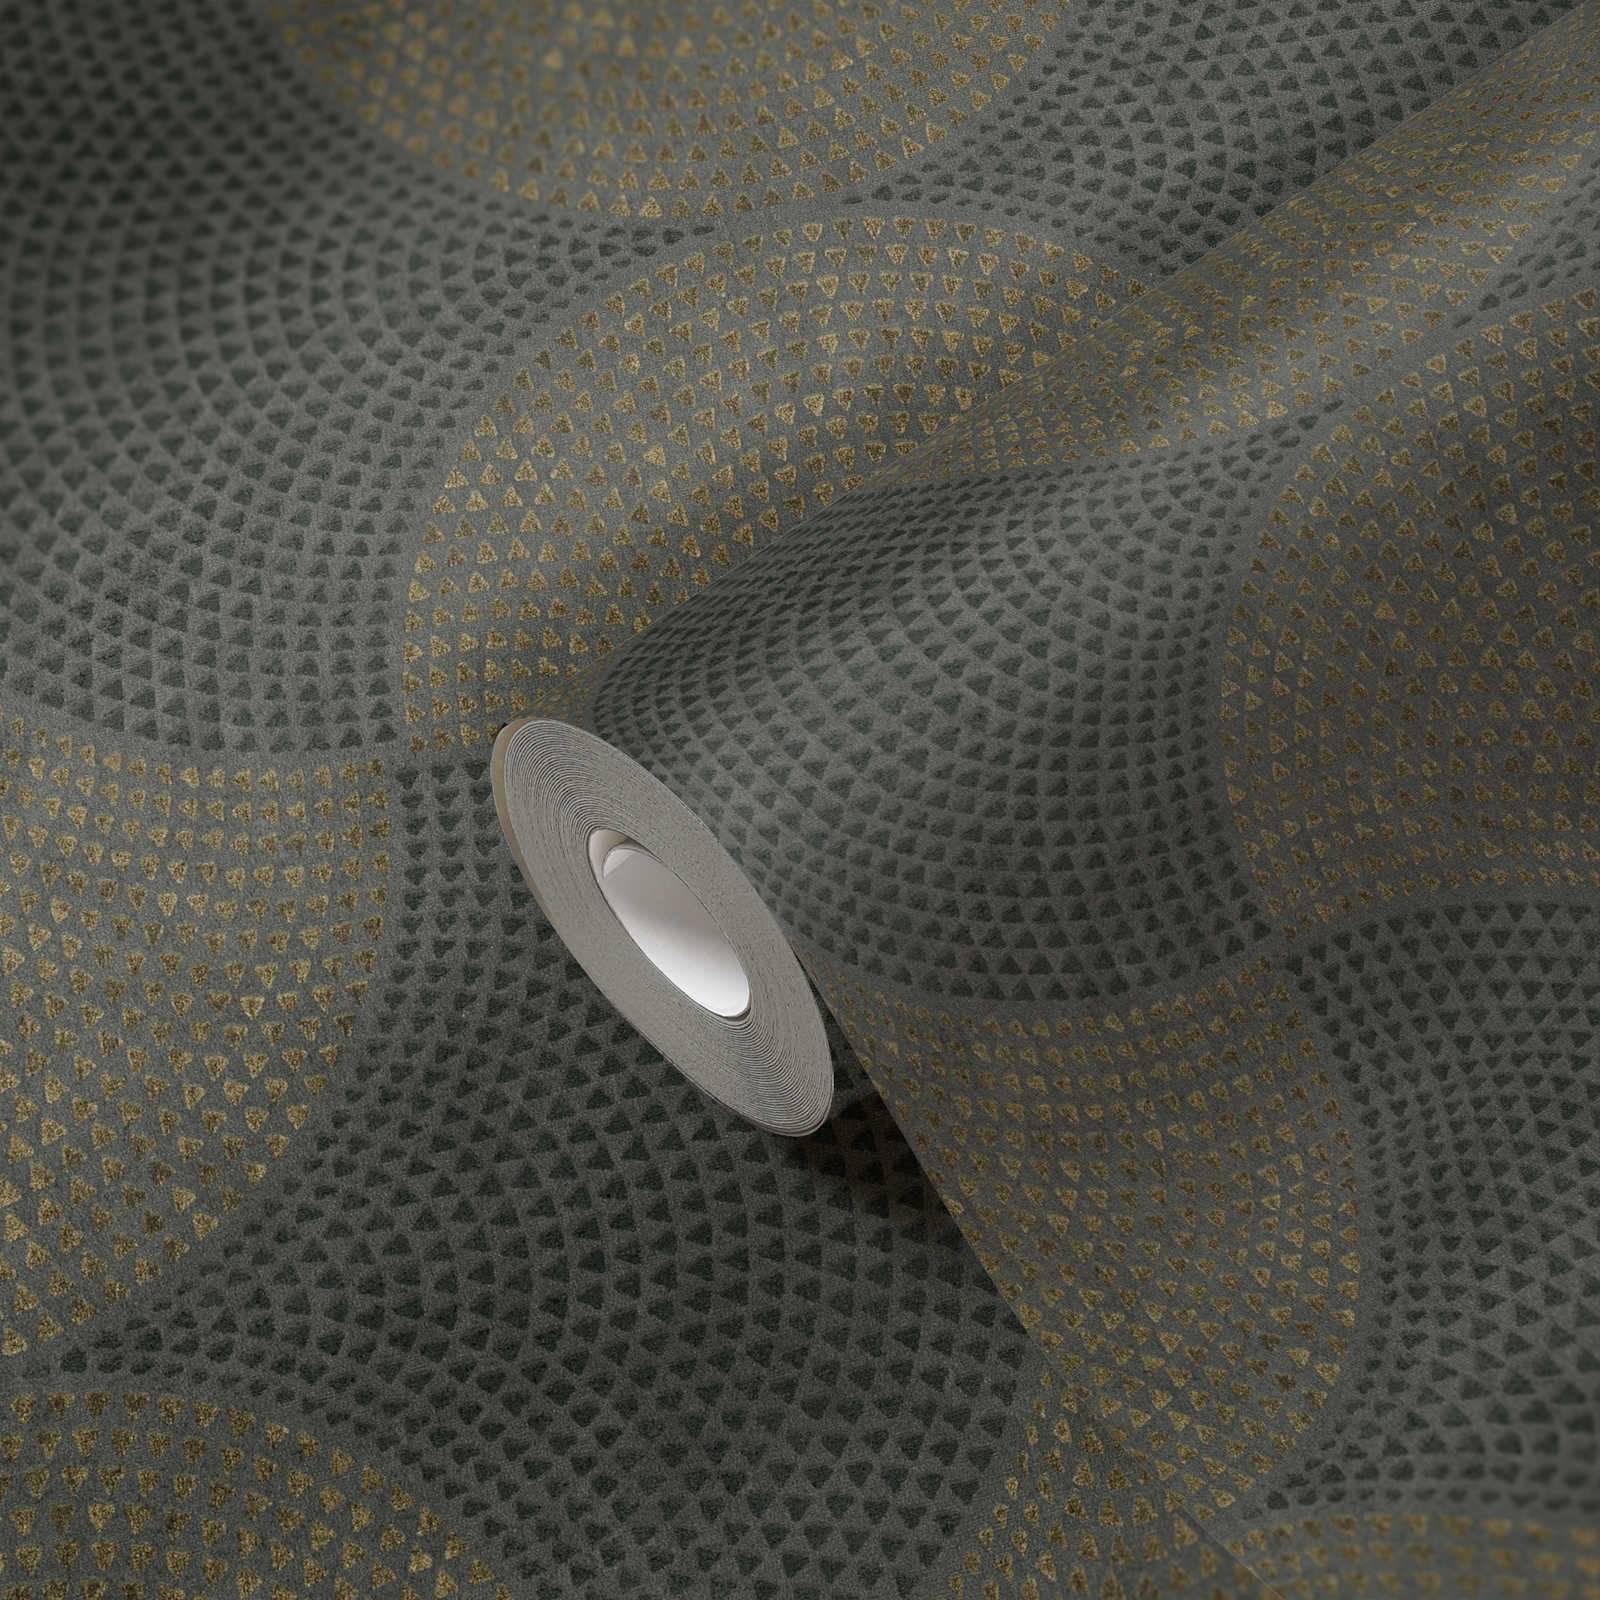             Wallpaper mosaic pattern with metallic effect & used look - grey, metallic
        